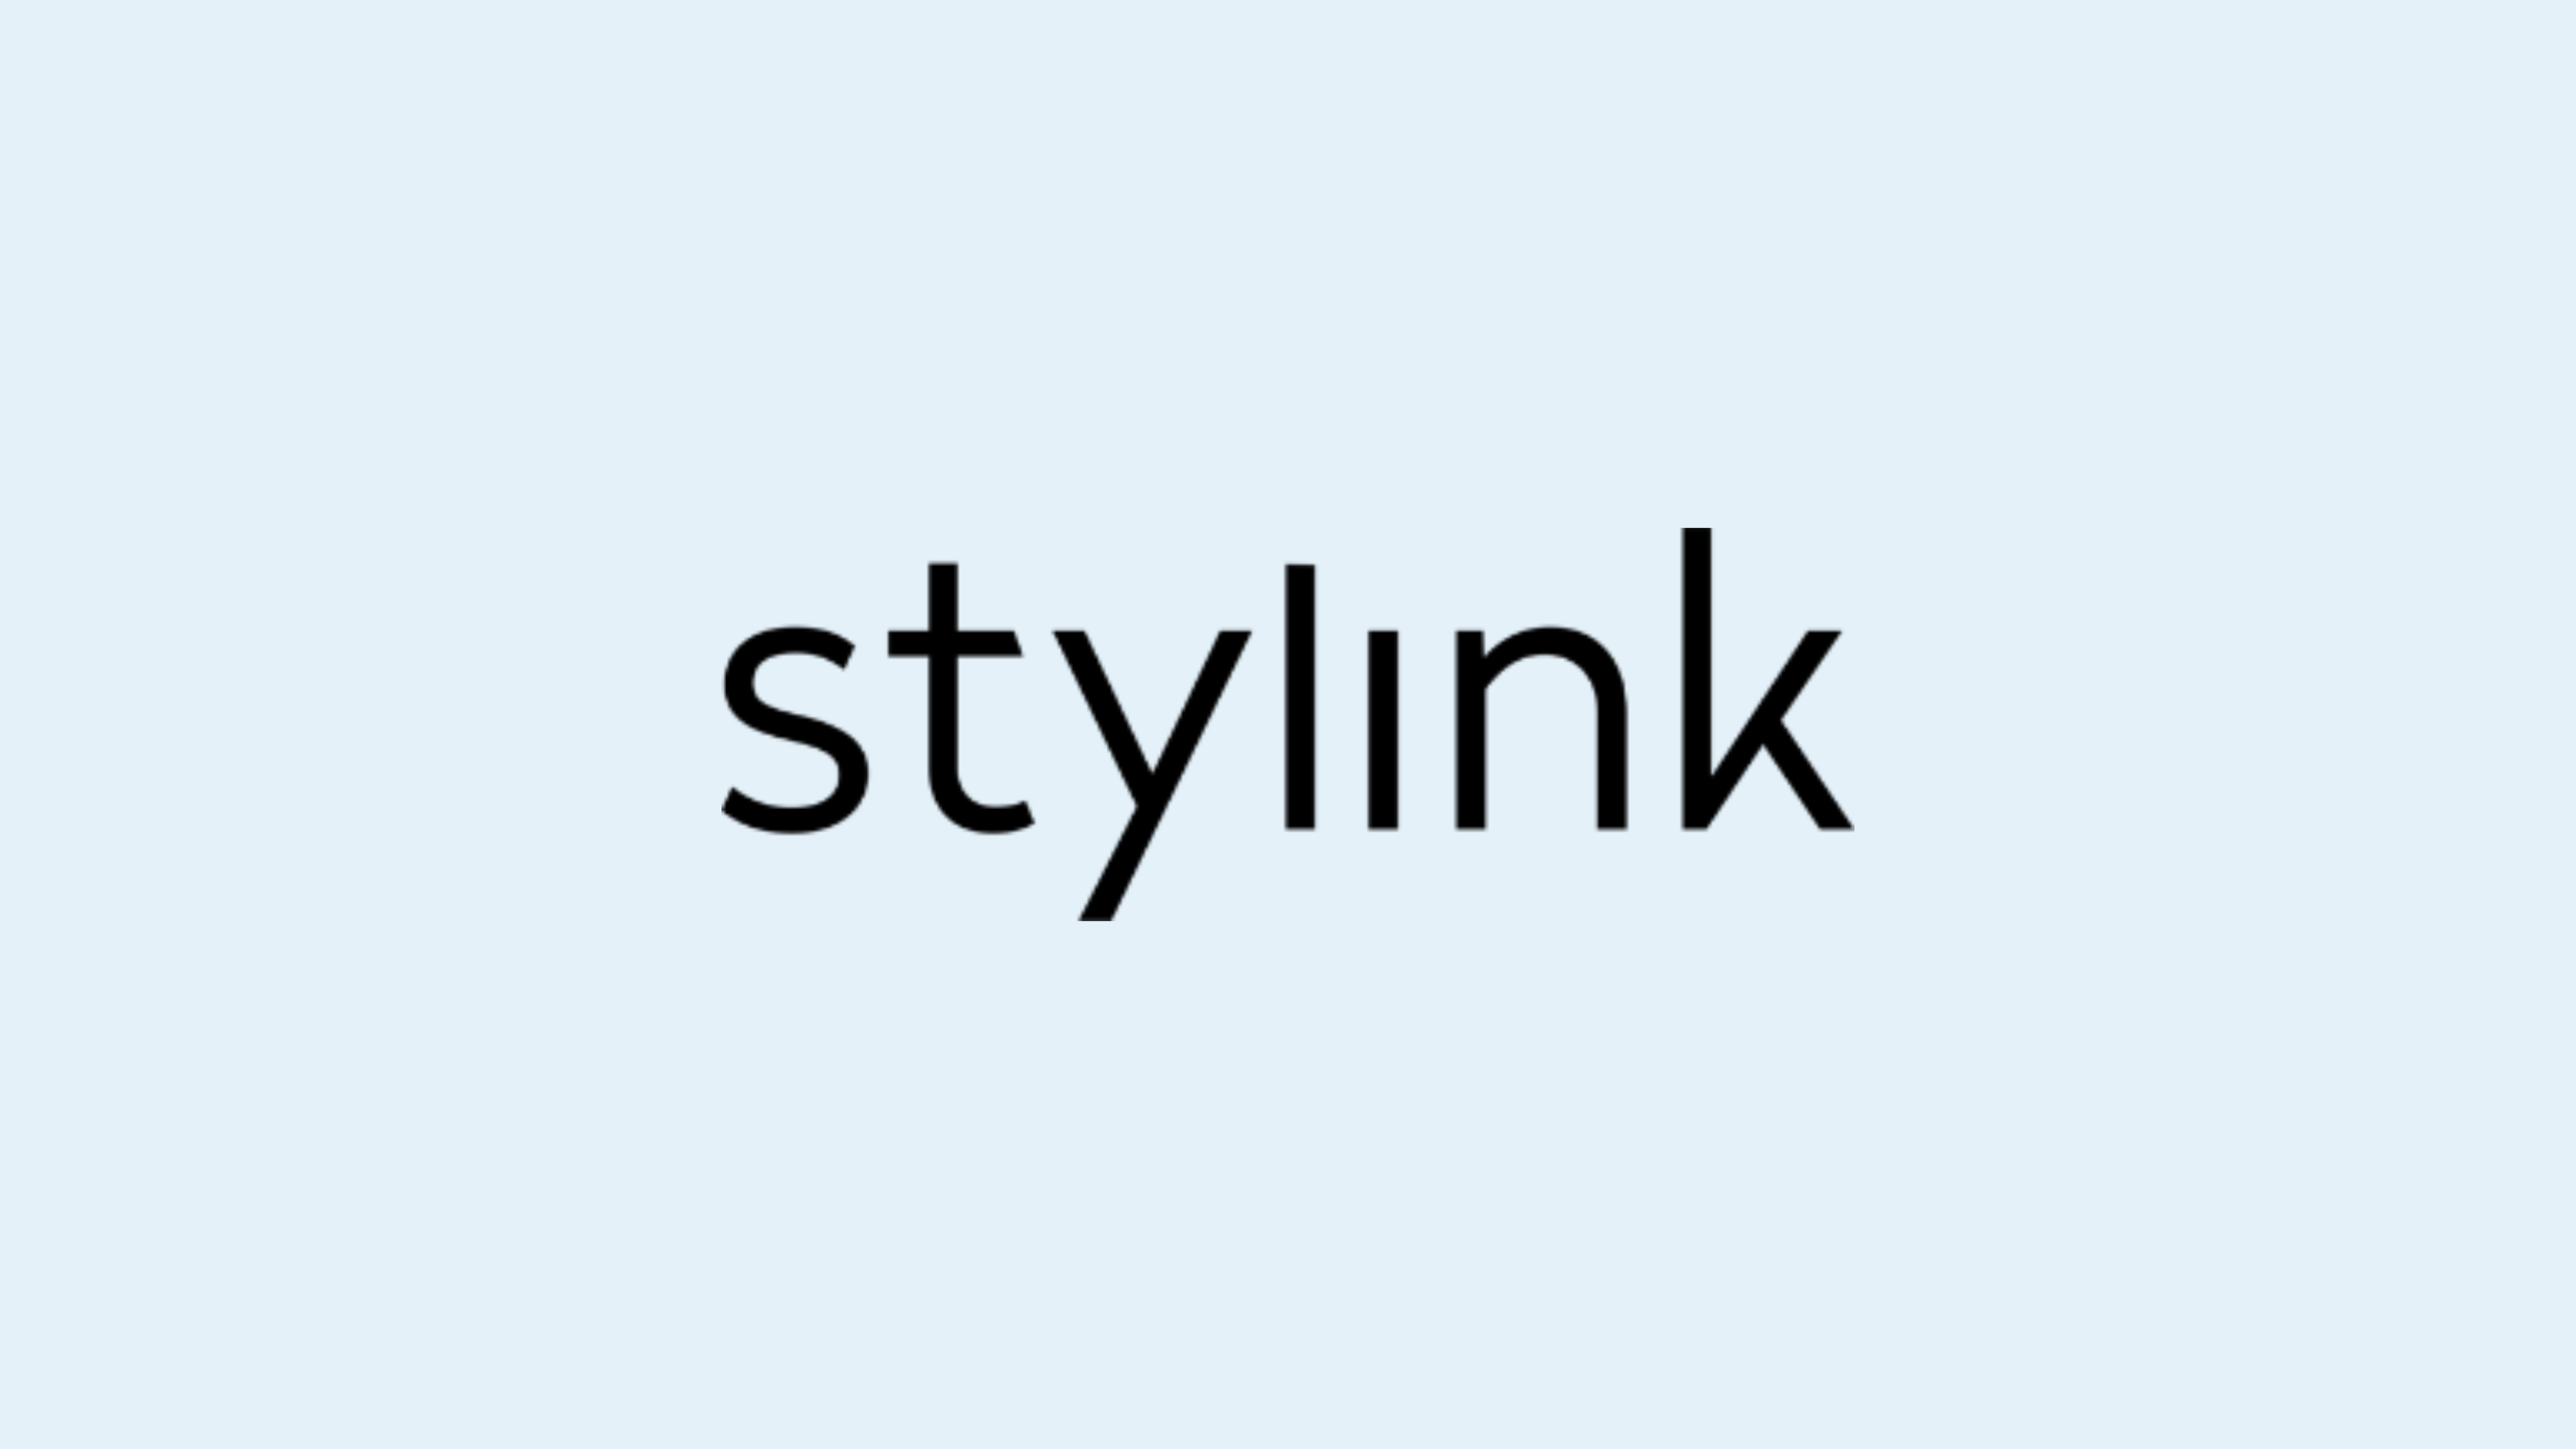 stylink logo cover case study